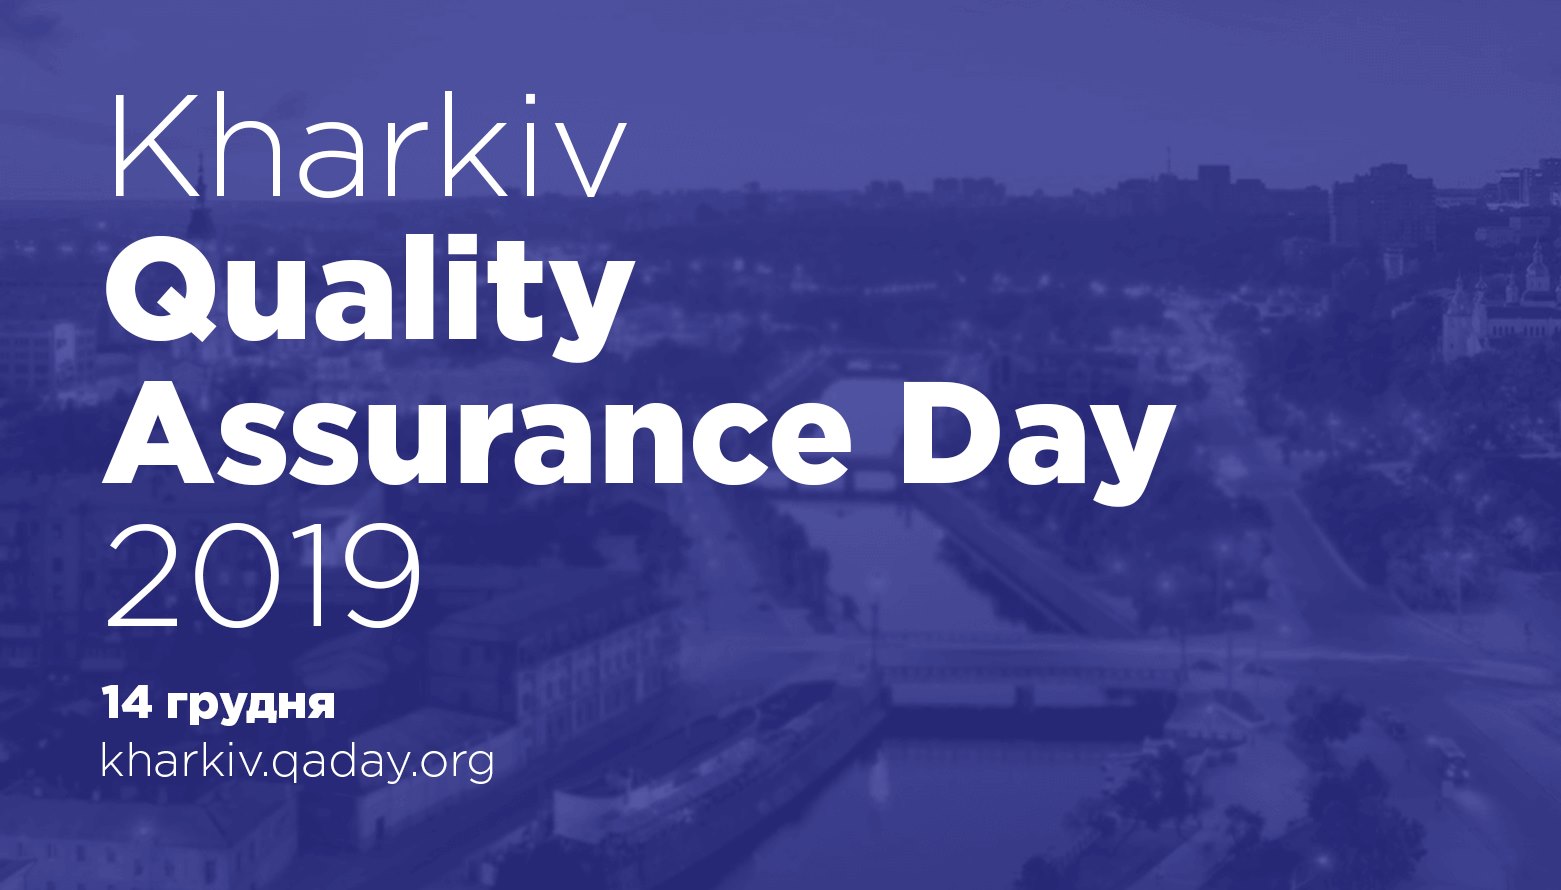 Kharkiv Quality Assurance Day 2019